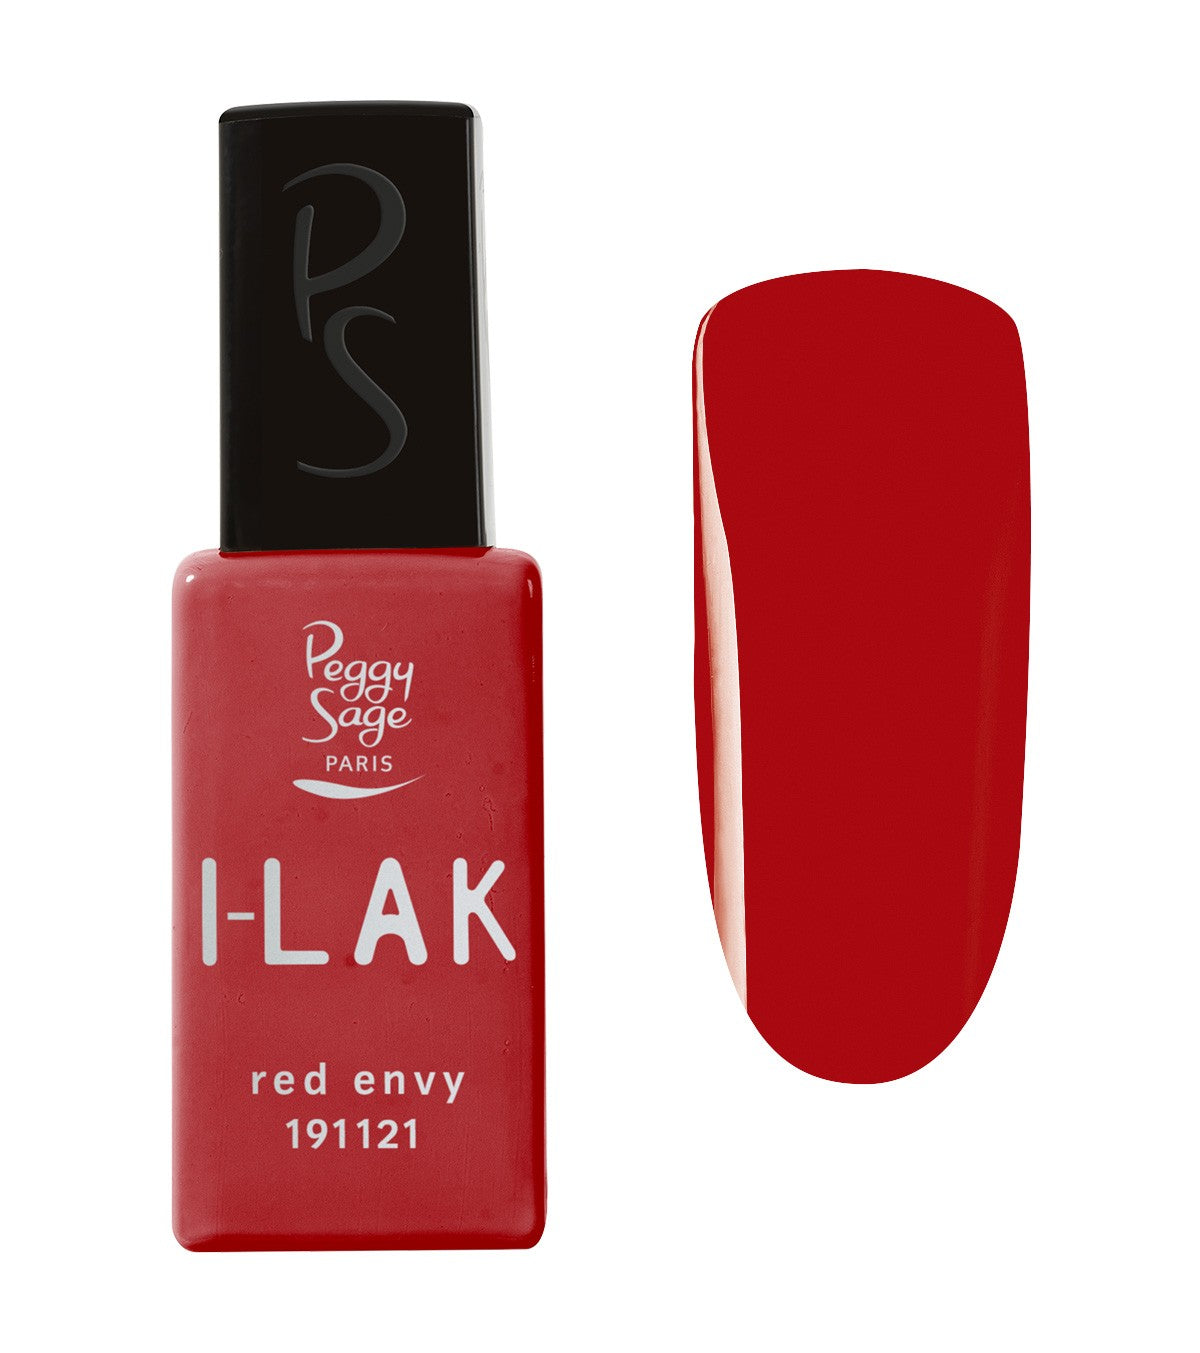 I-LAK Red Envy Ref 191121